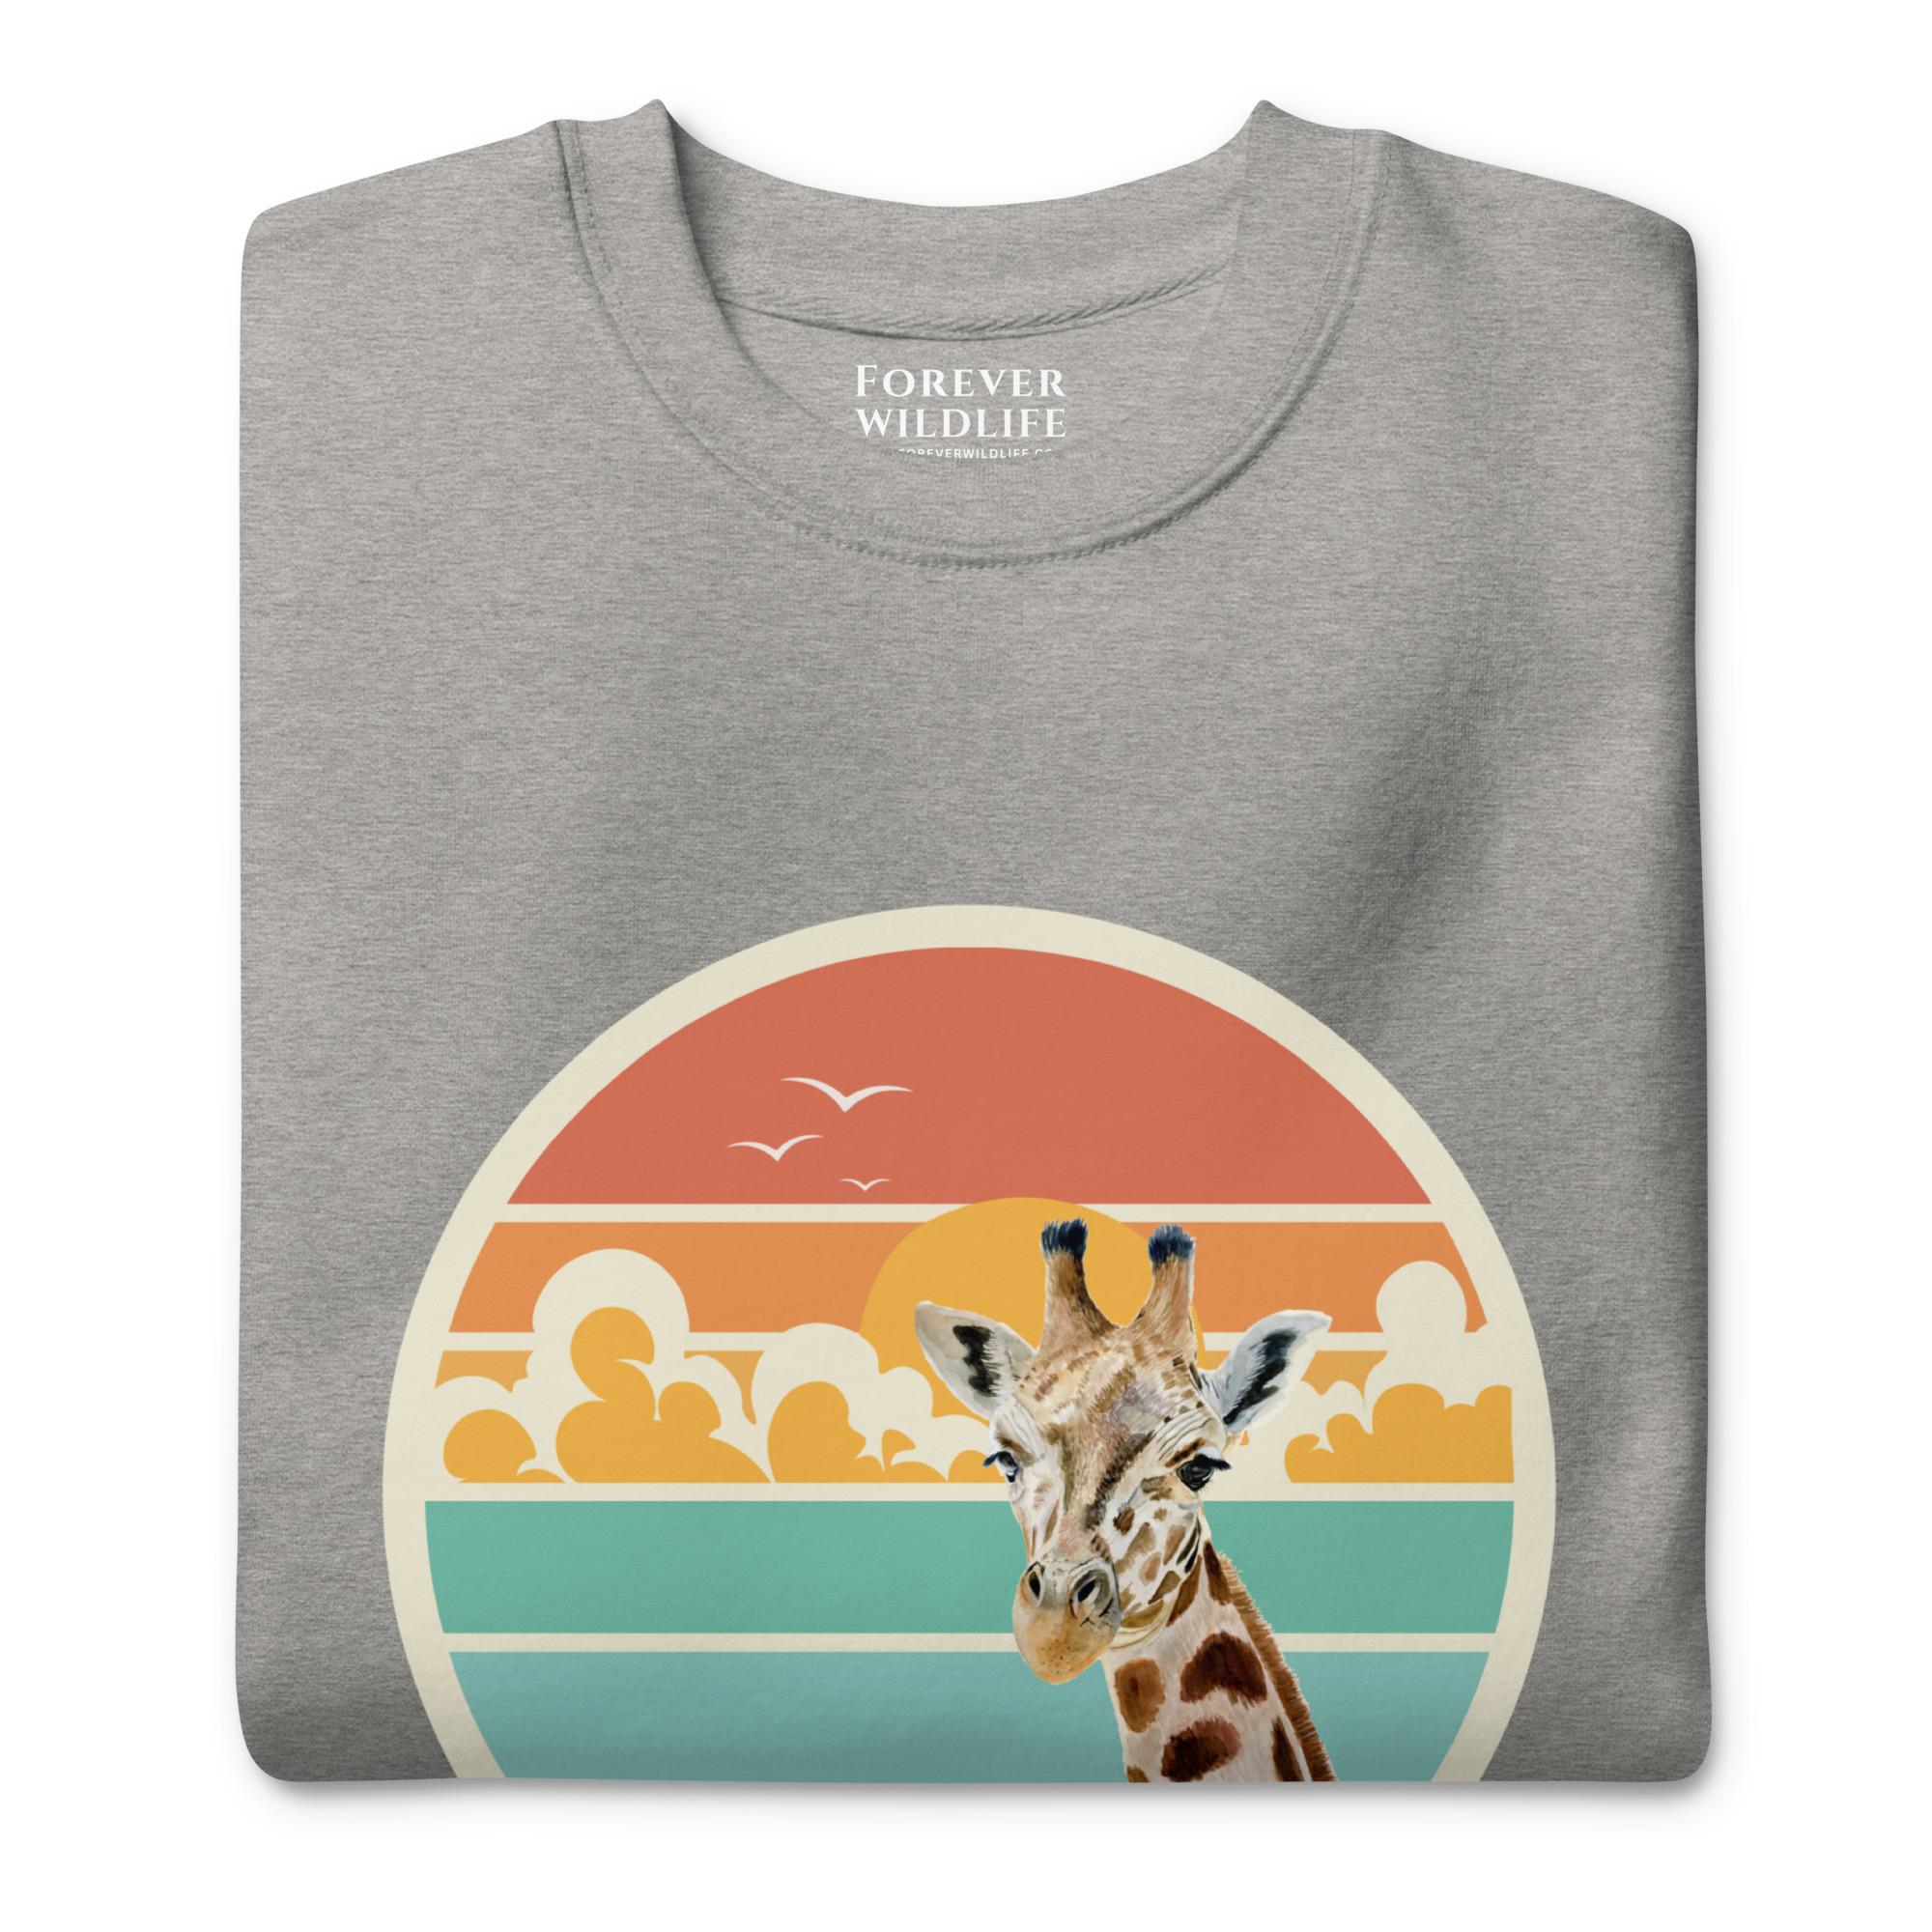 Giraffe Sweatshirt in Grey-Premium Wildlife Animal Inspiration Sweatshirt Design, part of Wildlife Sweatshirts & Clothing from Forever Wildlife.